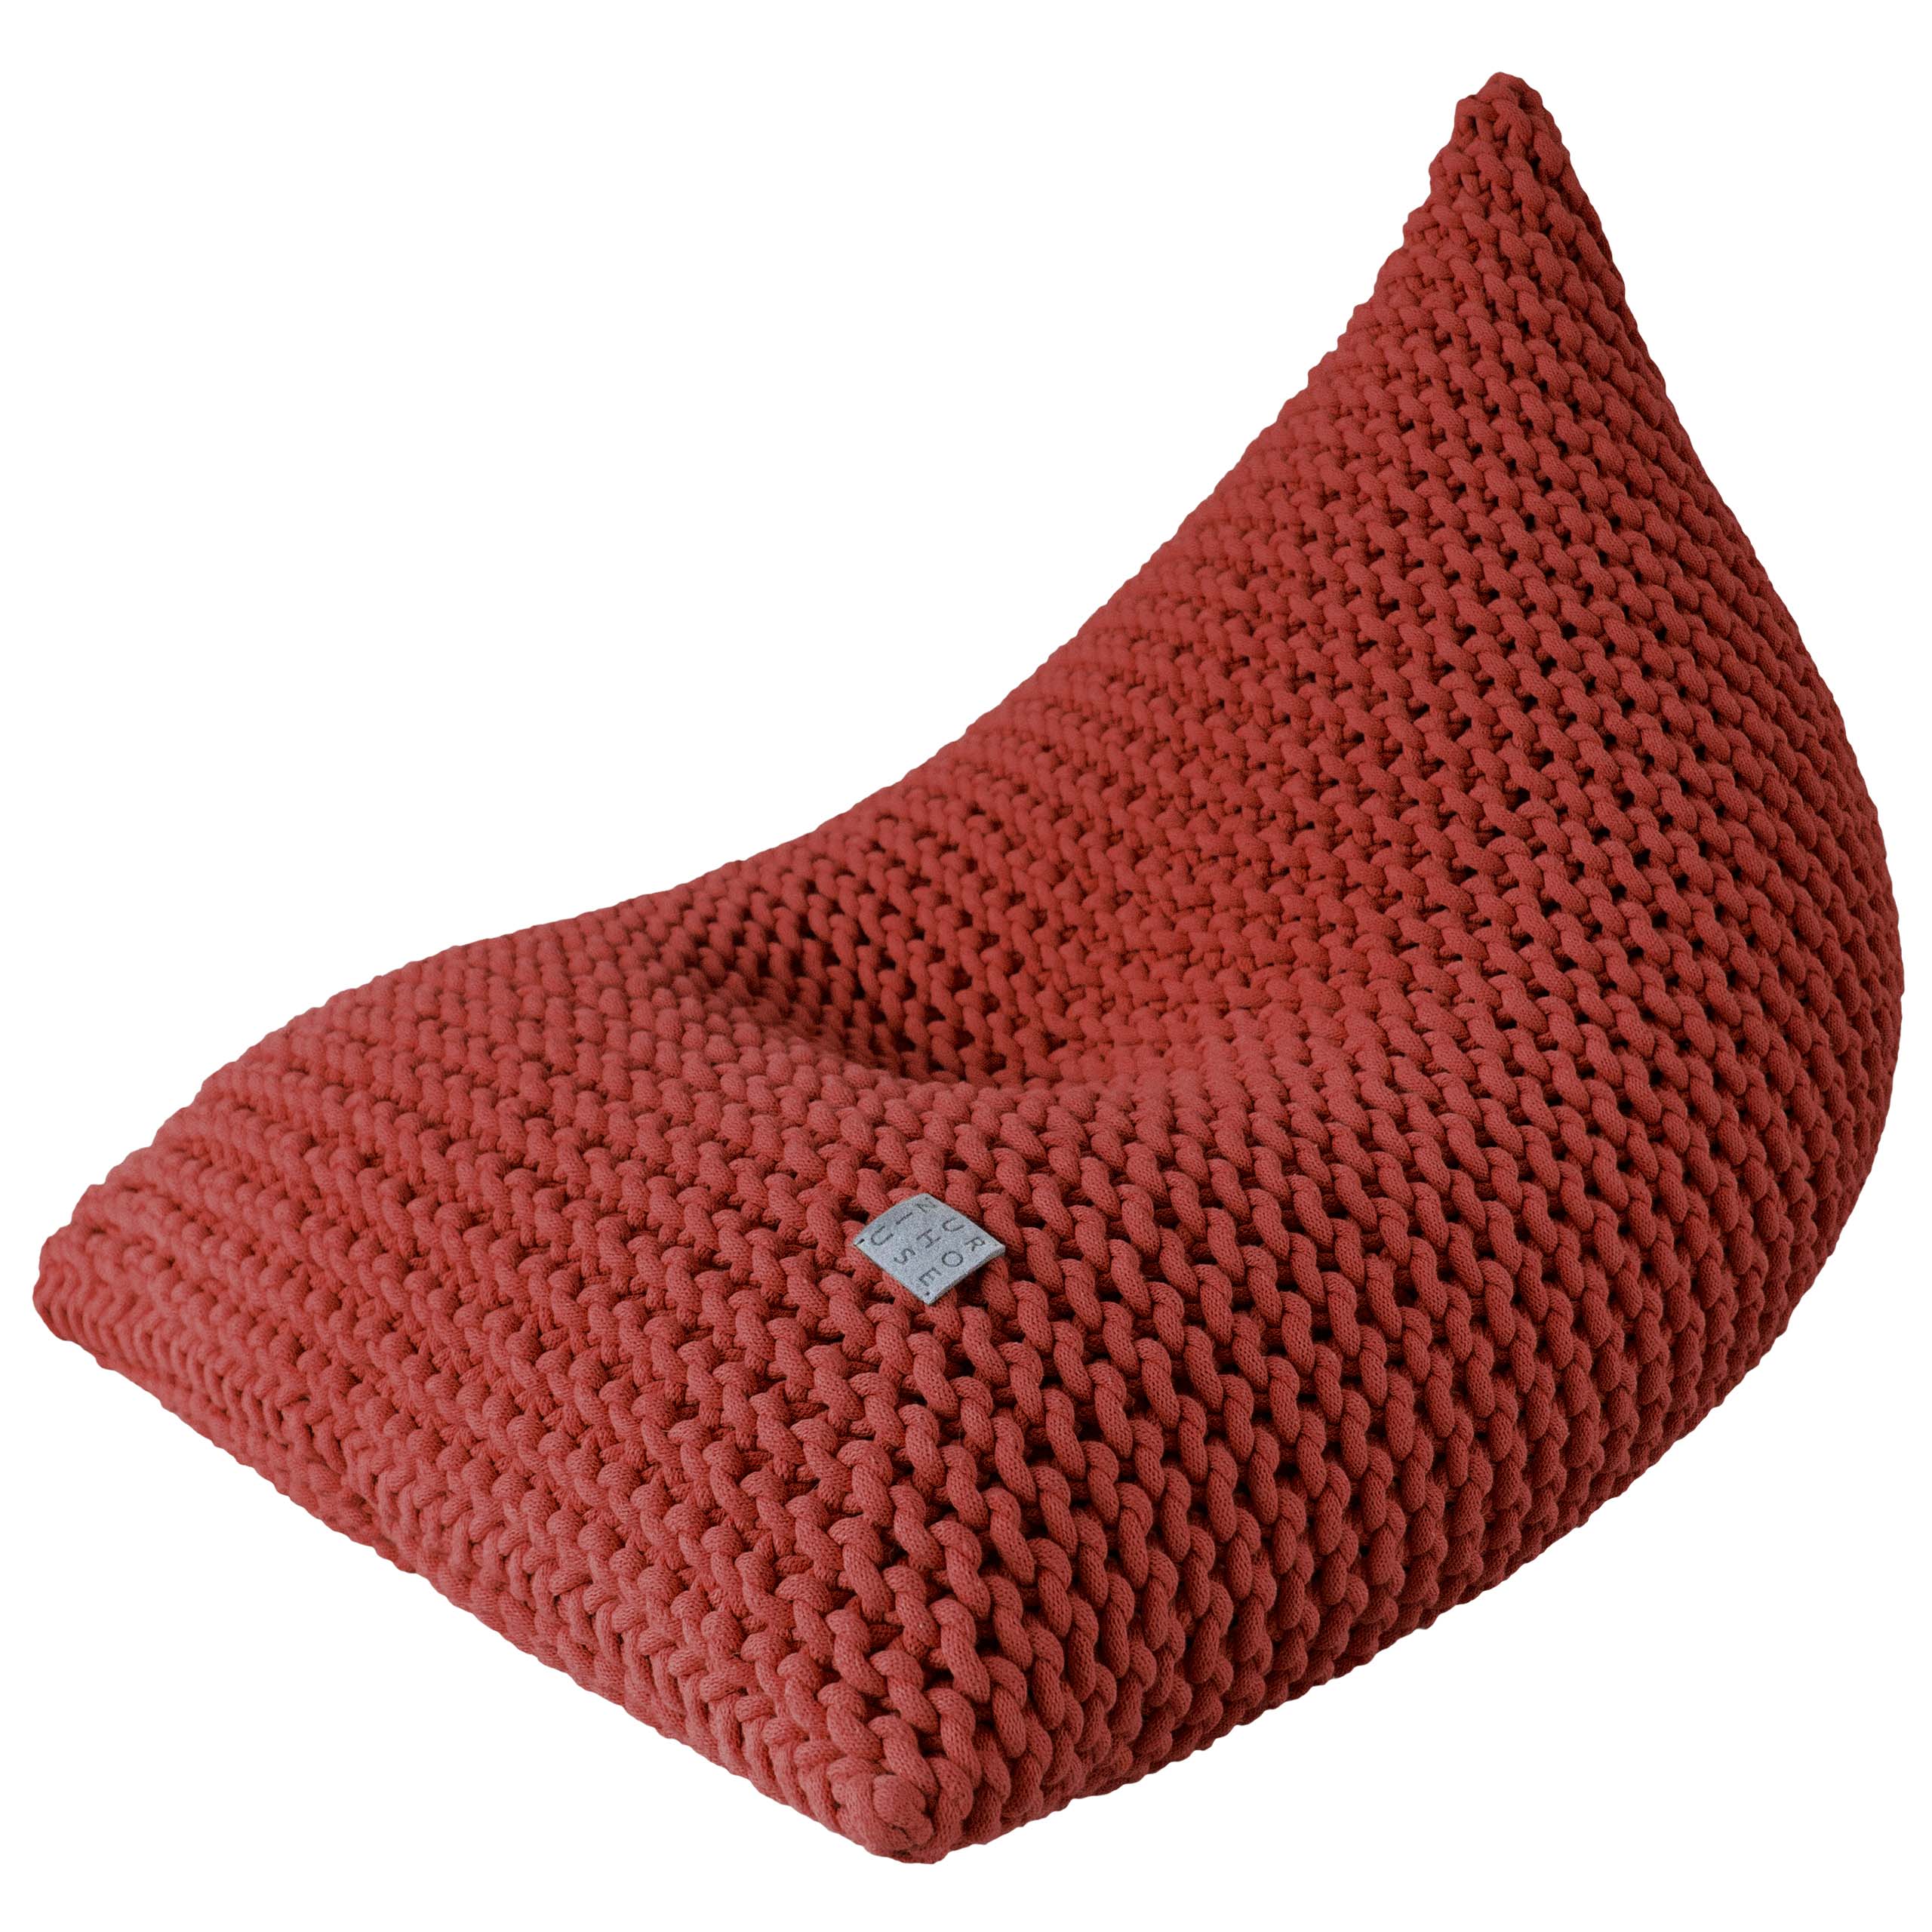 Zuri House Chunky Knitted Bean Bag | TERRACOTTA - FILLED 80 x 100 x 80cm / 32'' x 40'' x 32''